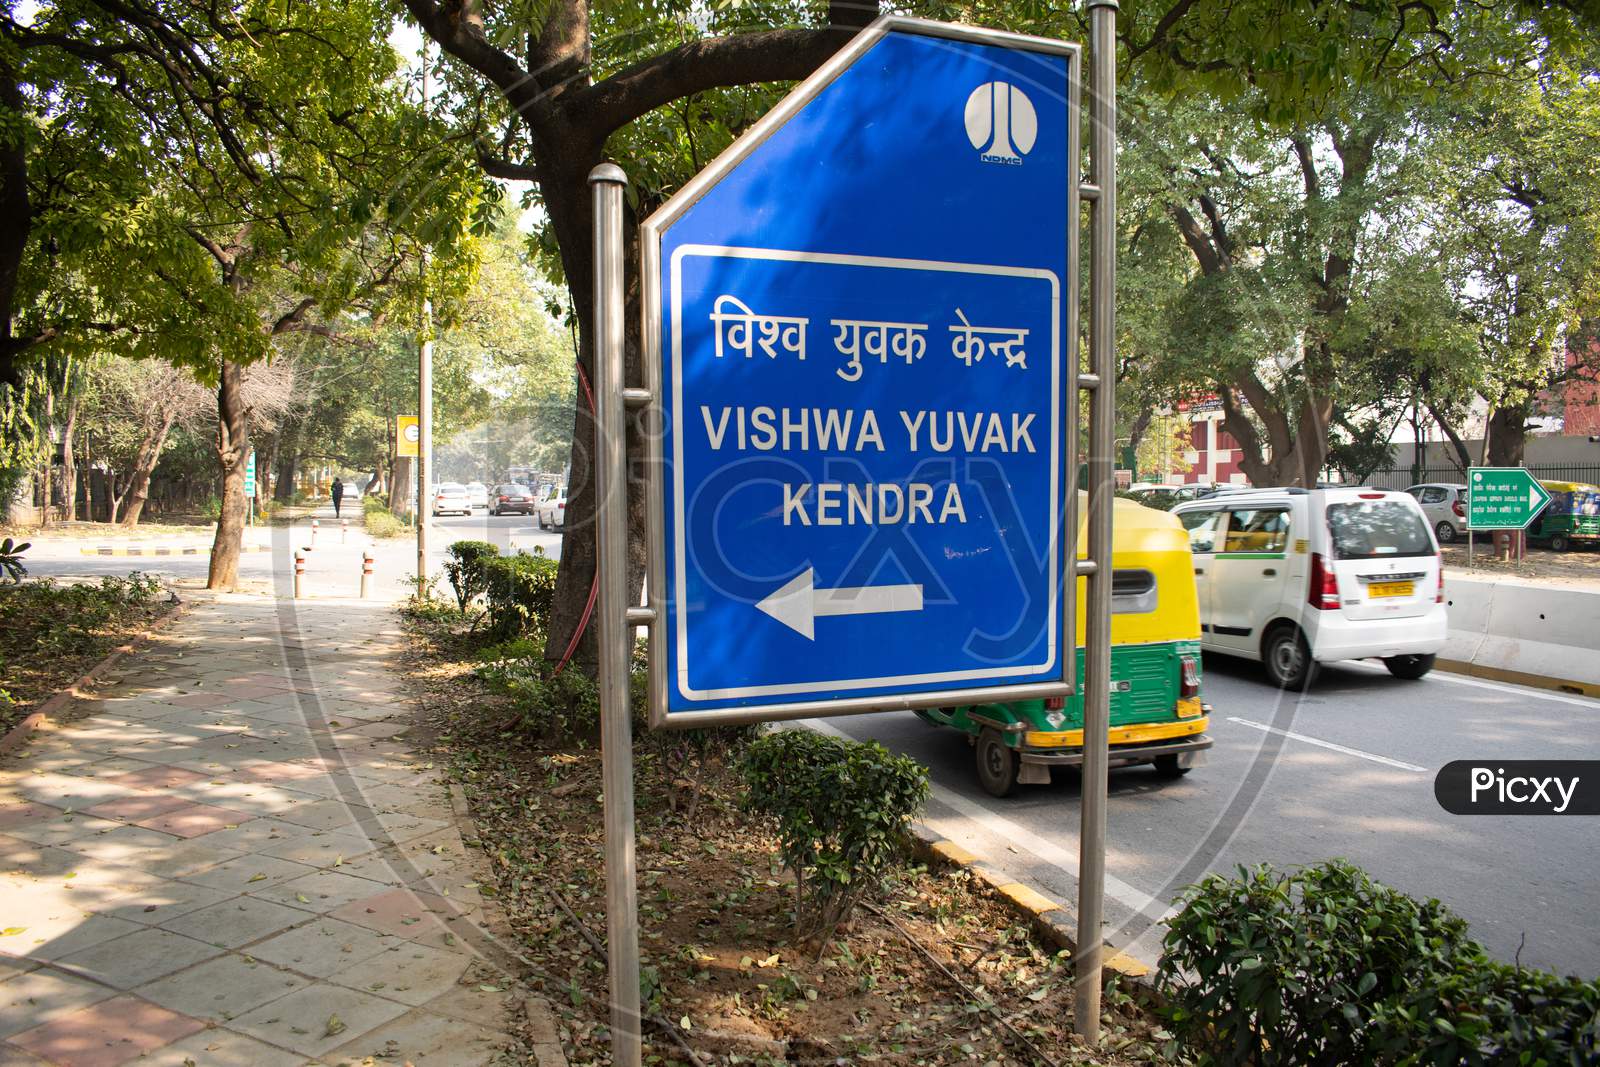 Vishwa Yuvak Kendra or International Youth Center sign board